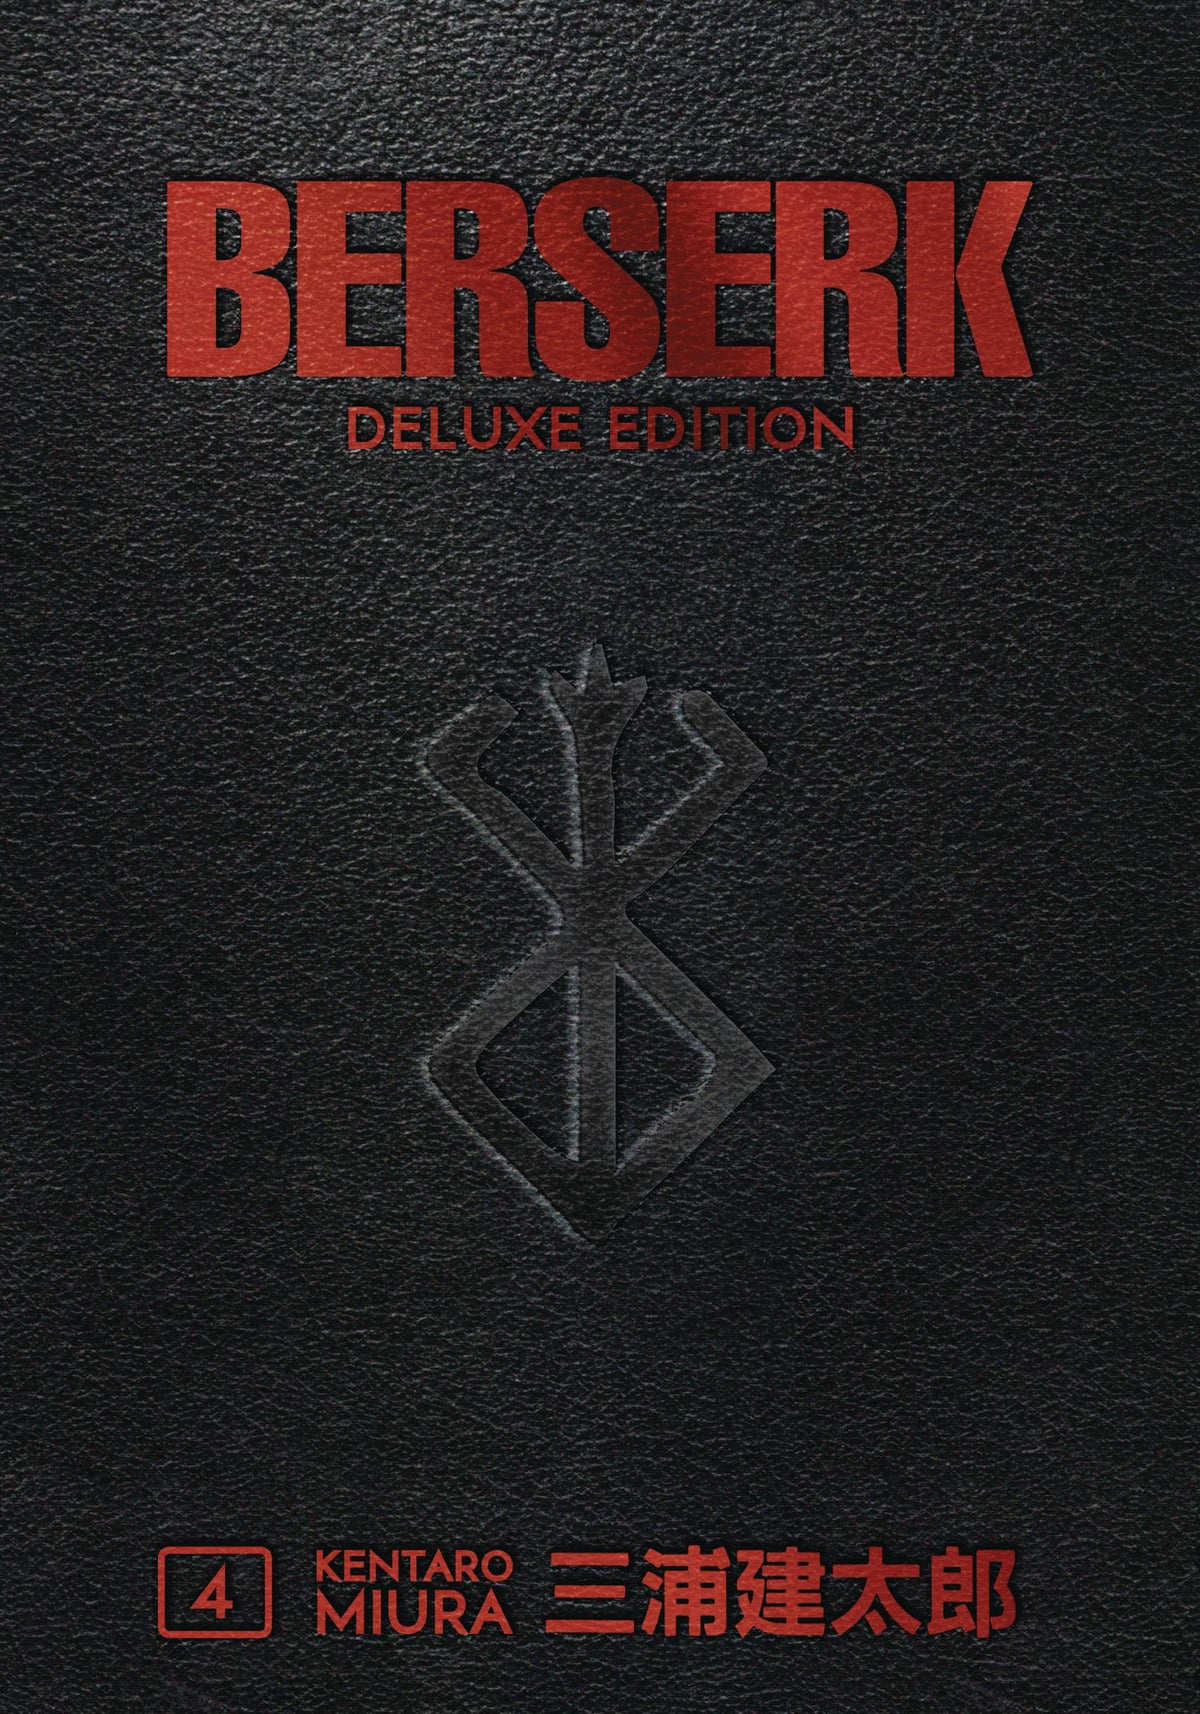 BERSERK DELUXE EDITION HC VOL 04 (MR) - Third Eye